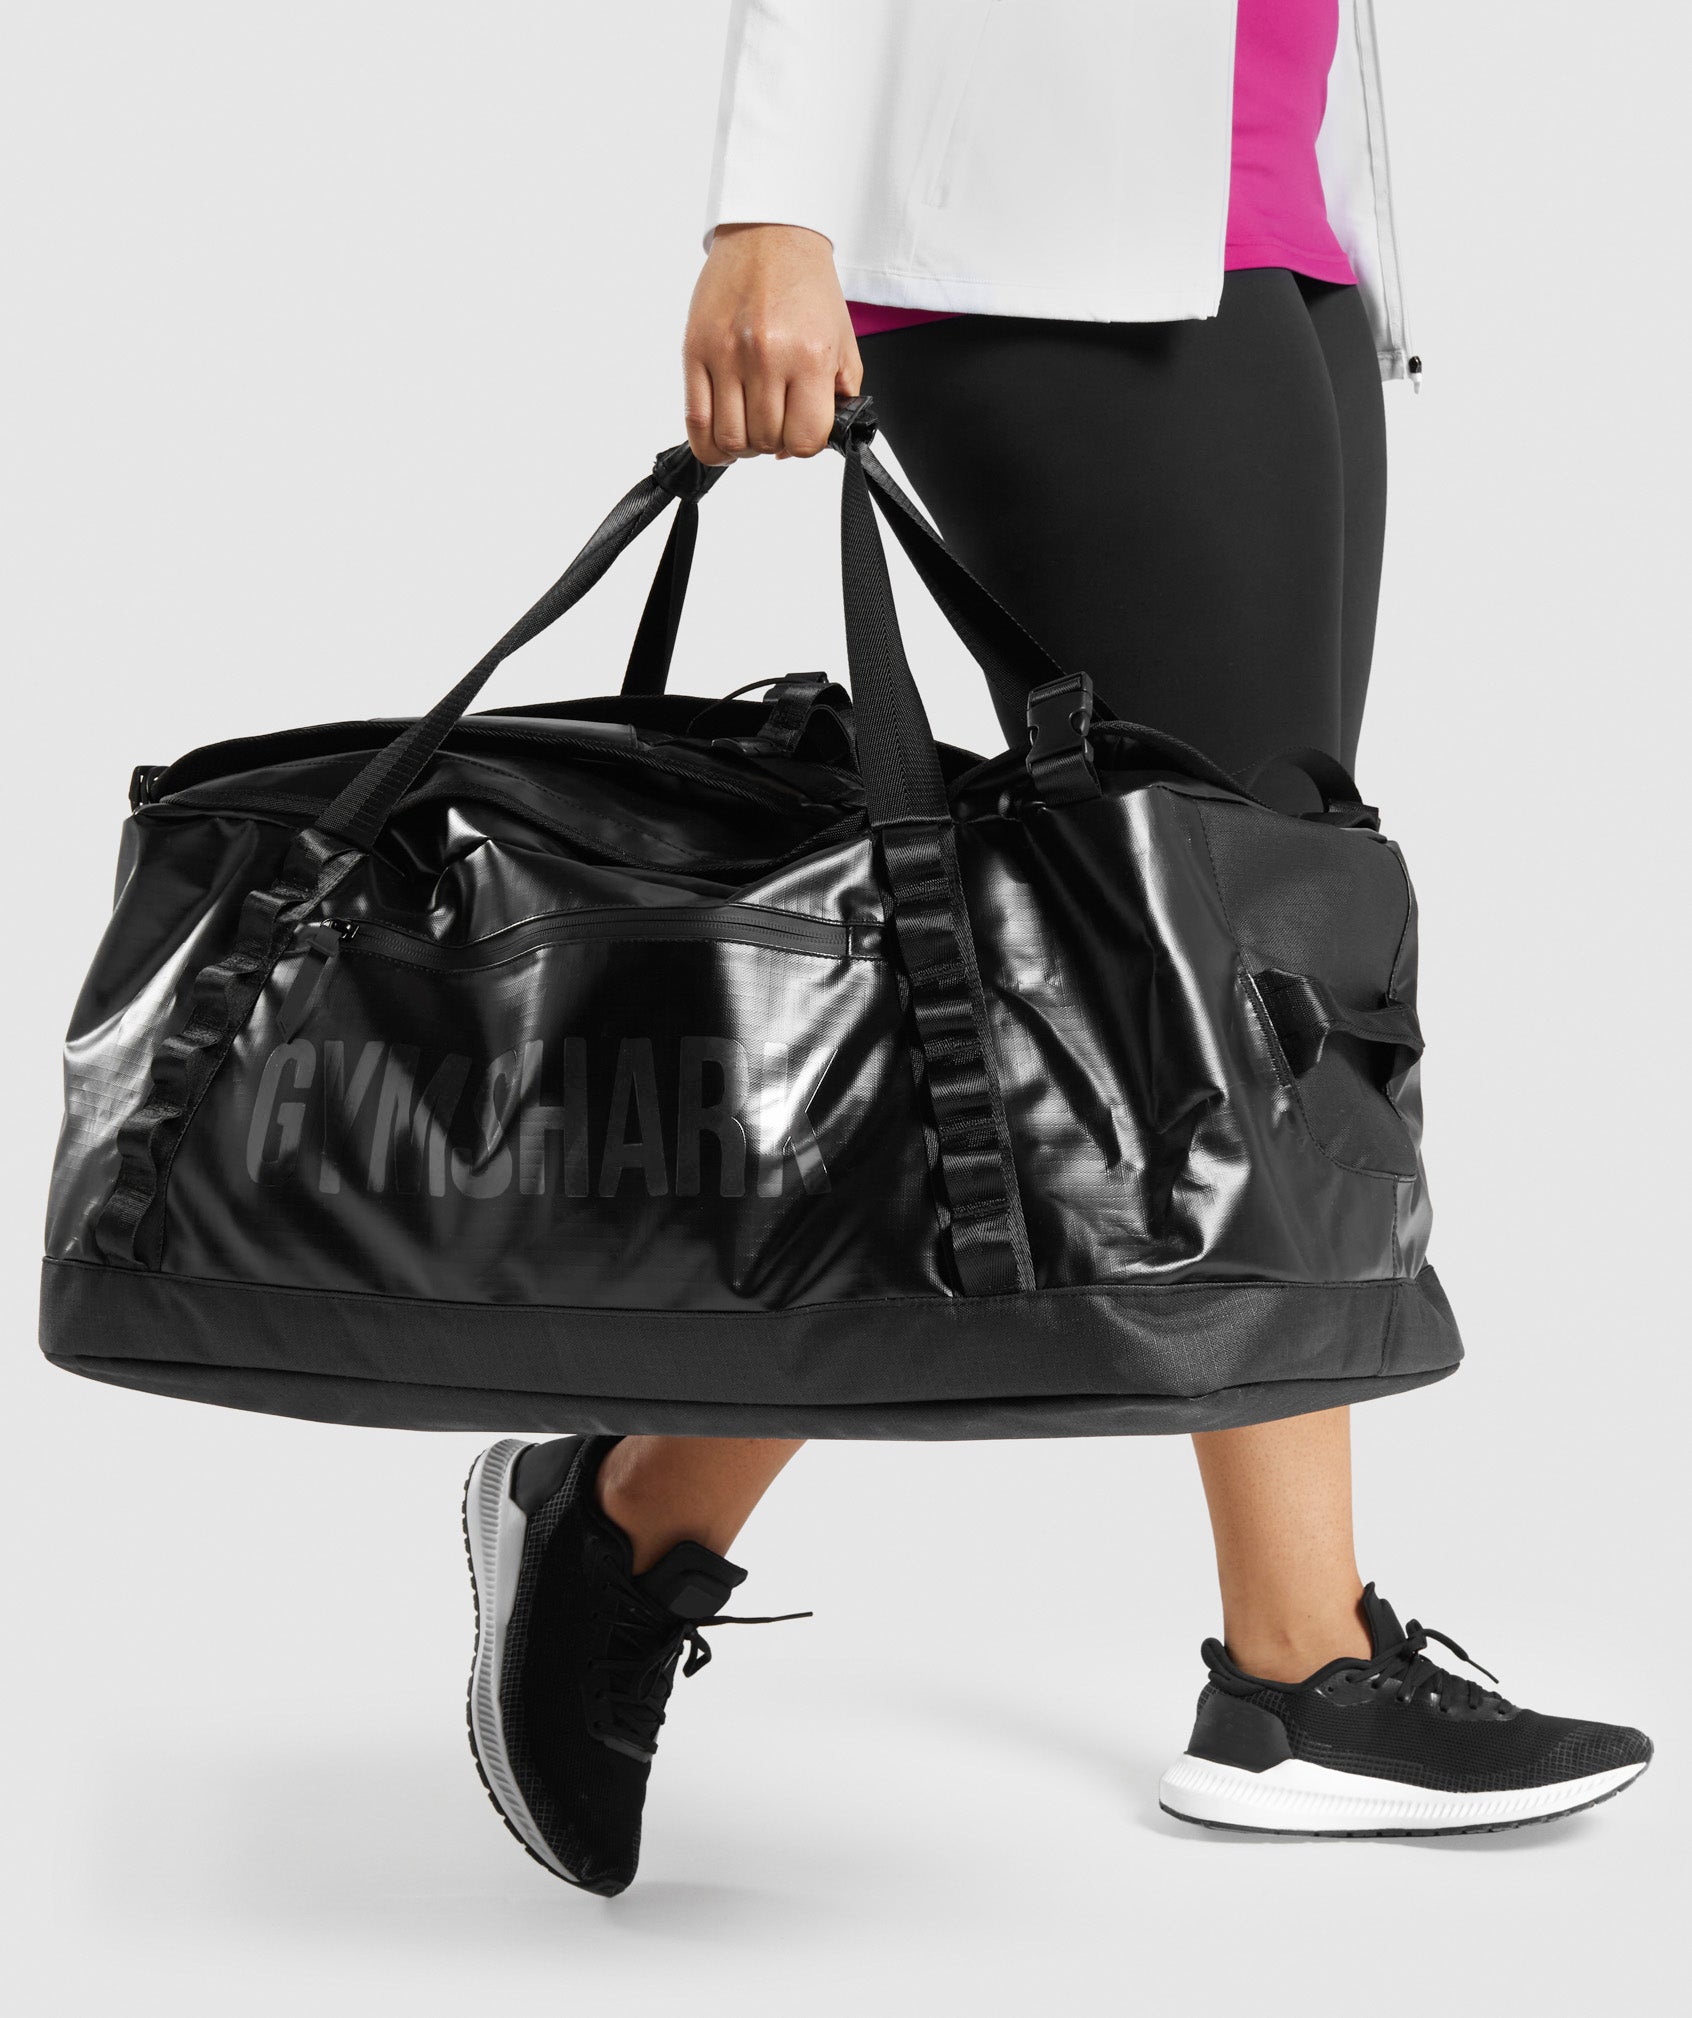 Gymshark X-Series Duffle Bag - Black | Gymshark